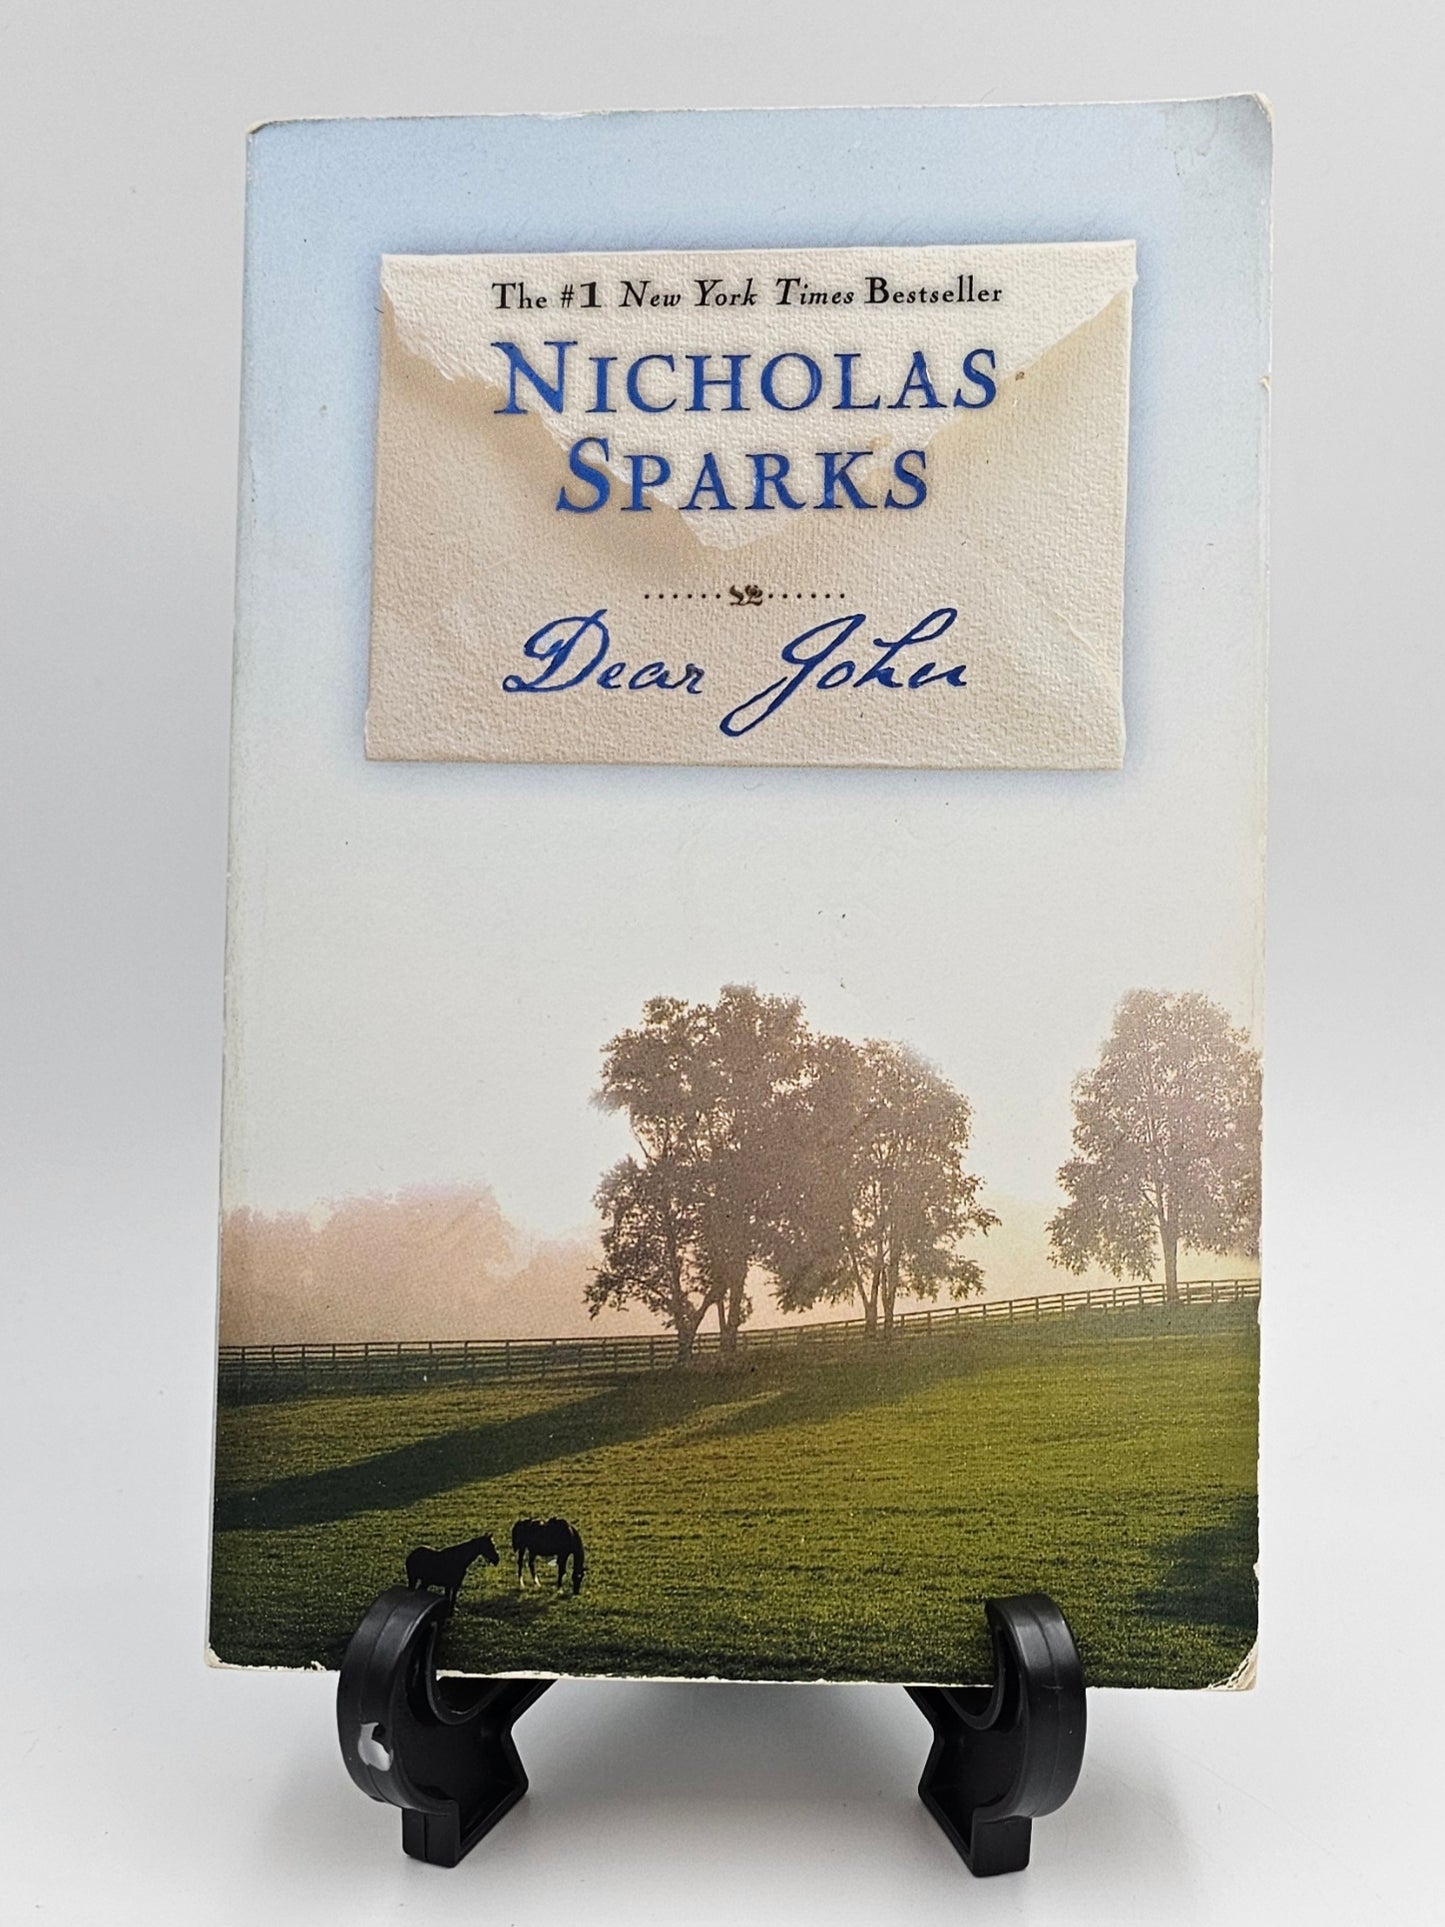 Dear John by Nicholas Sparks